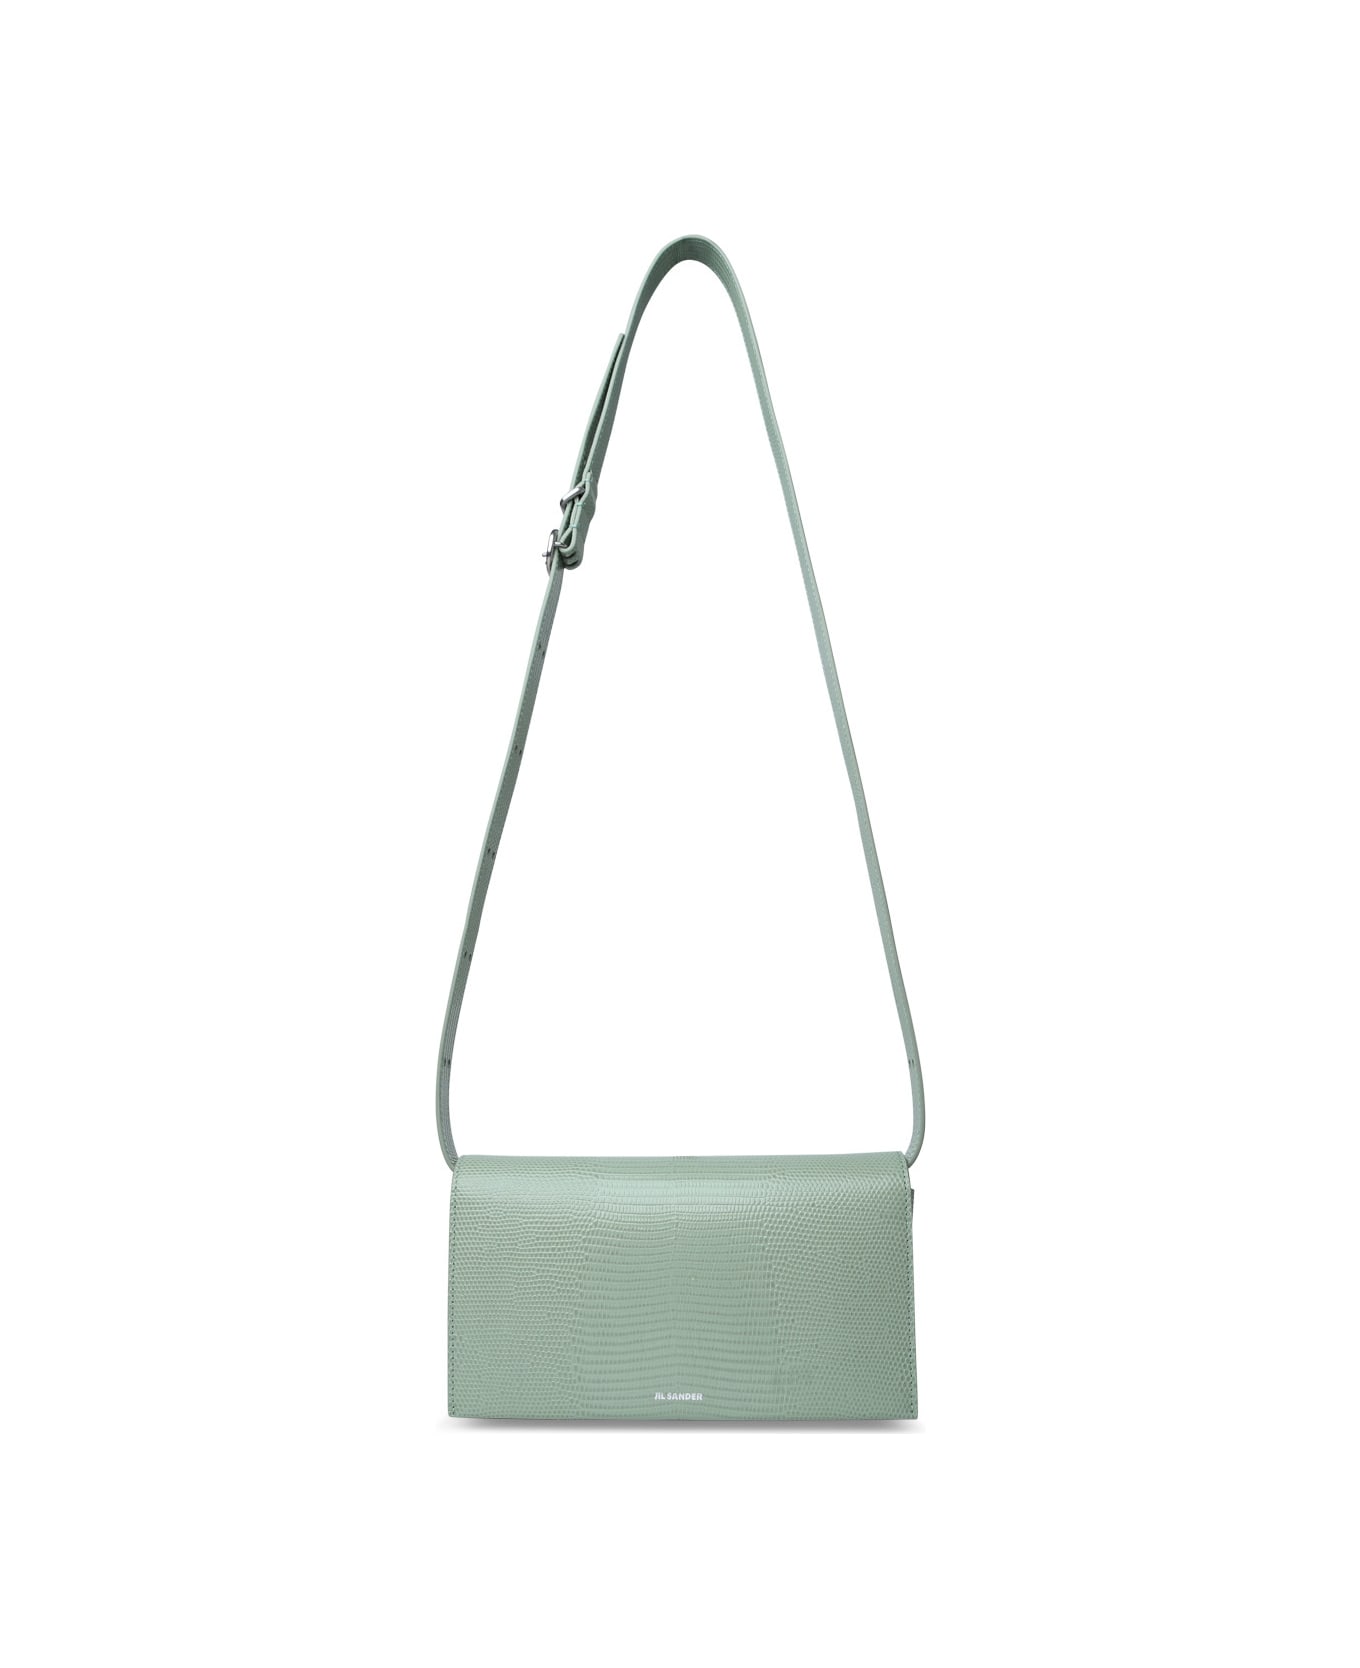 Jil Sander 'all-day' Pastel Green Calf Leather Bag - Green ショルダーバッグ